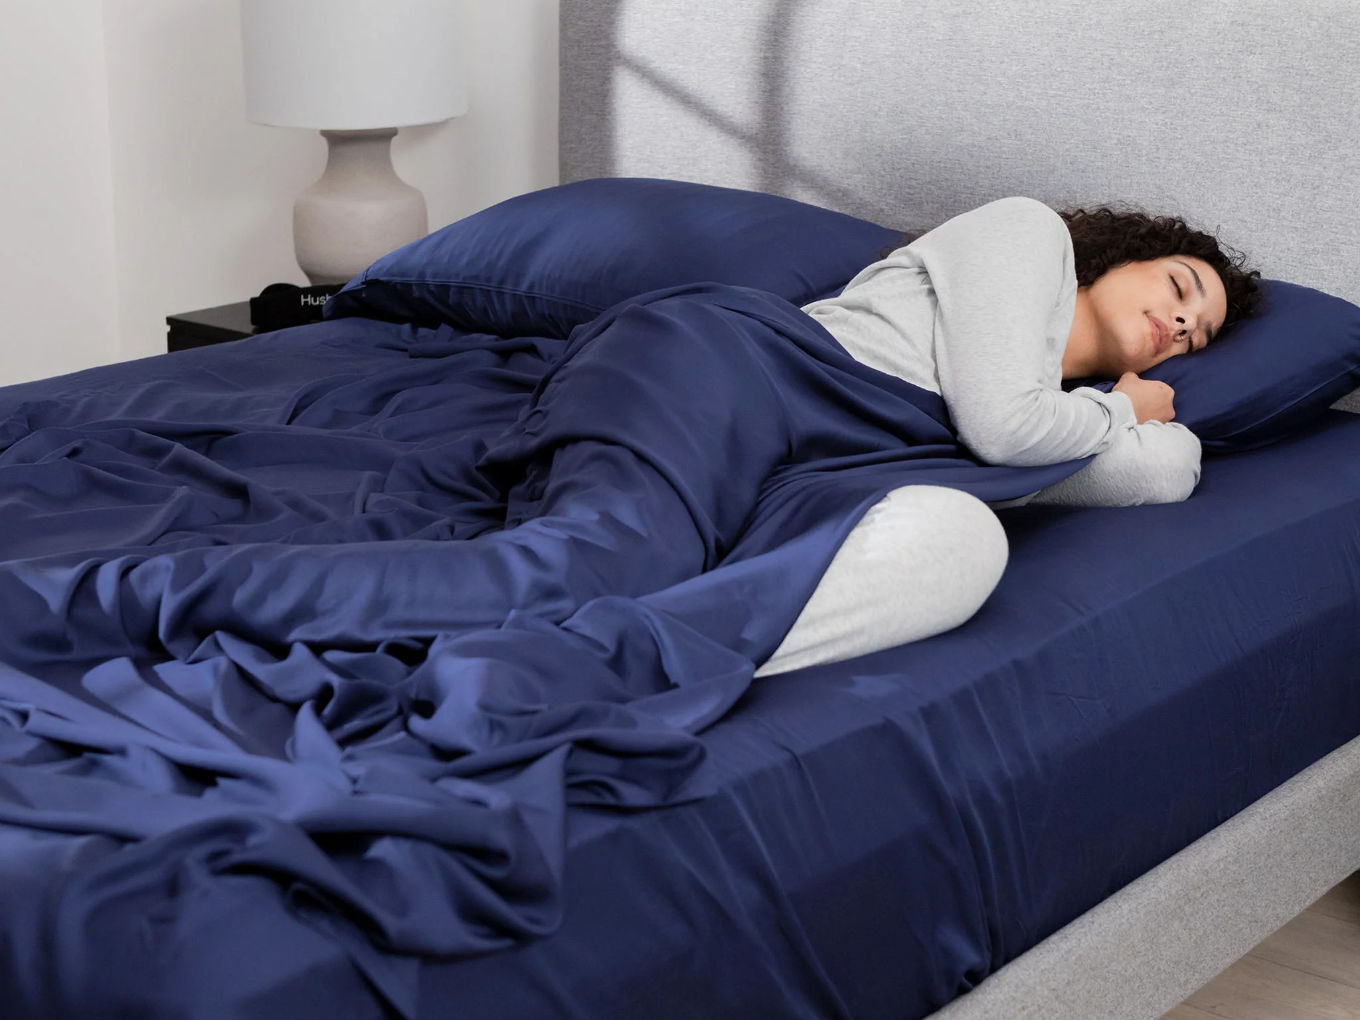 Woman sleeping soundly under dark blue sheets